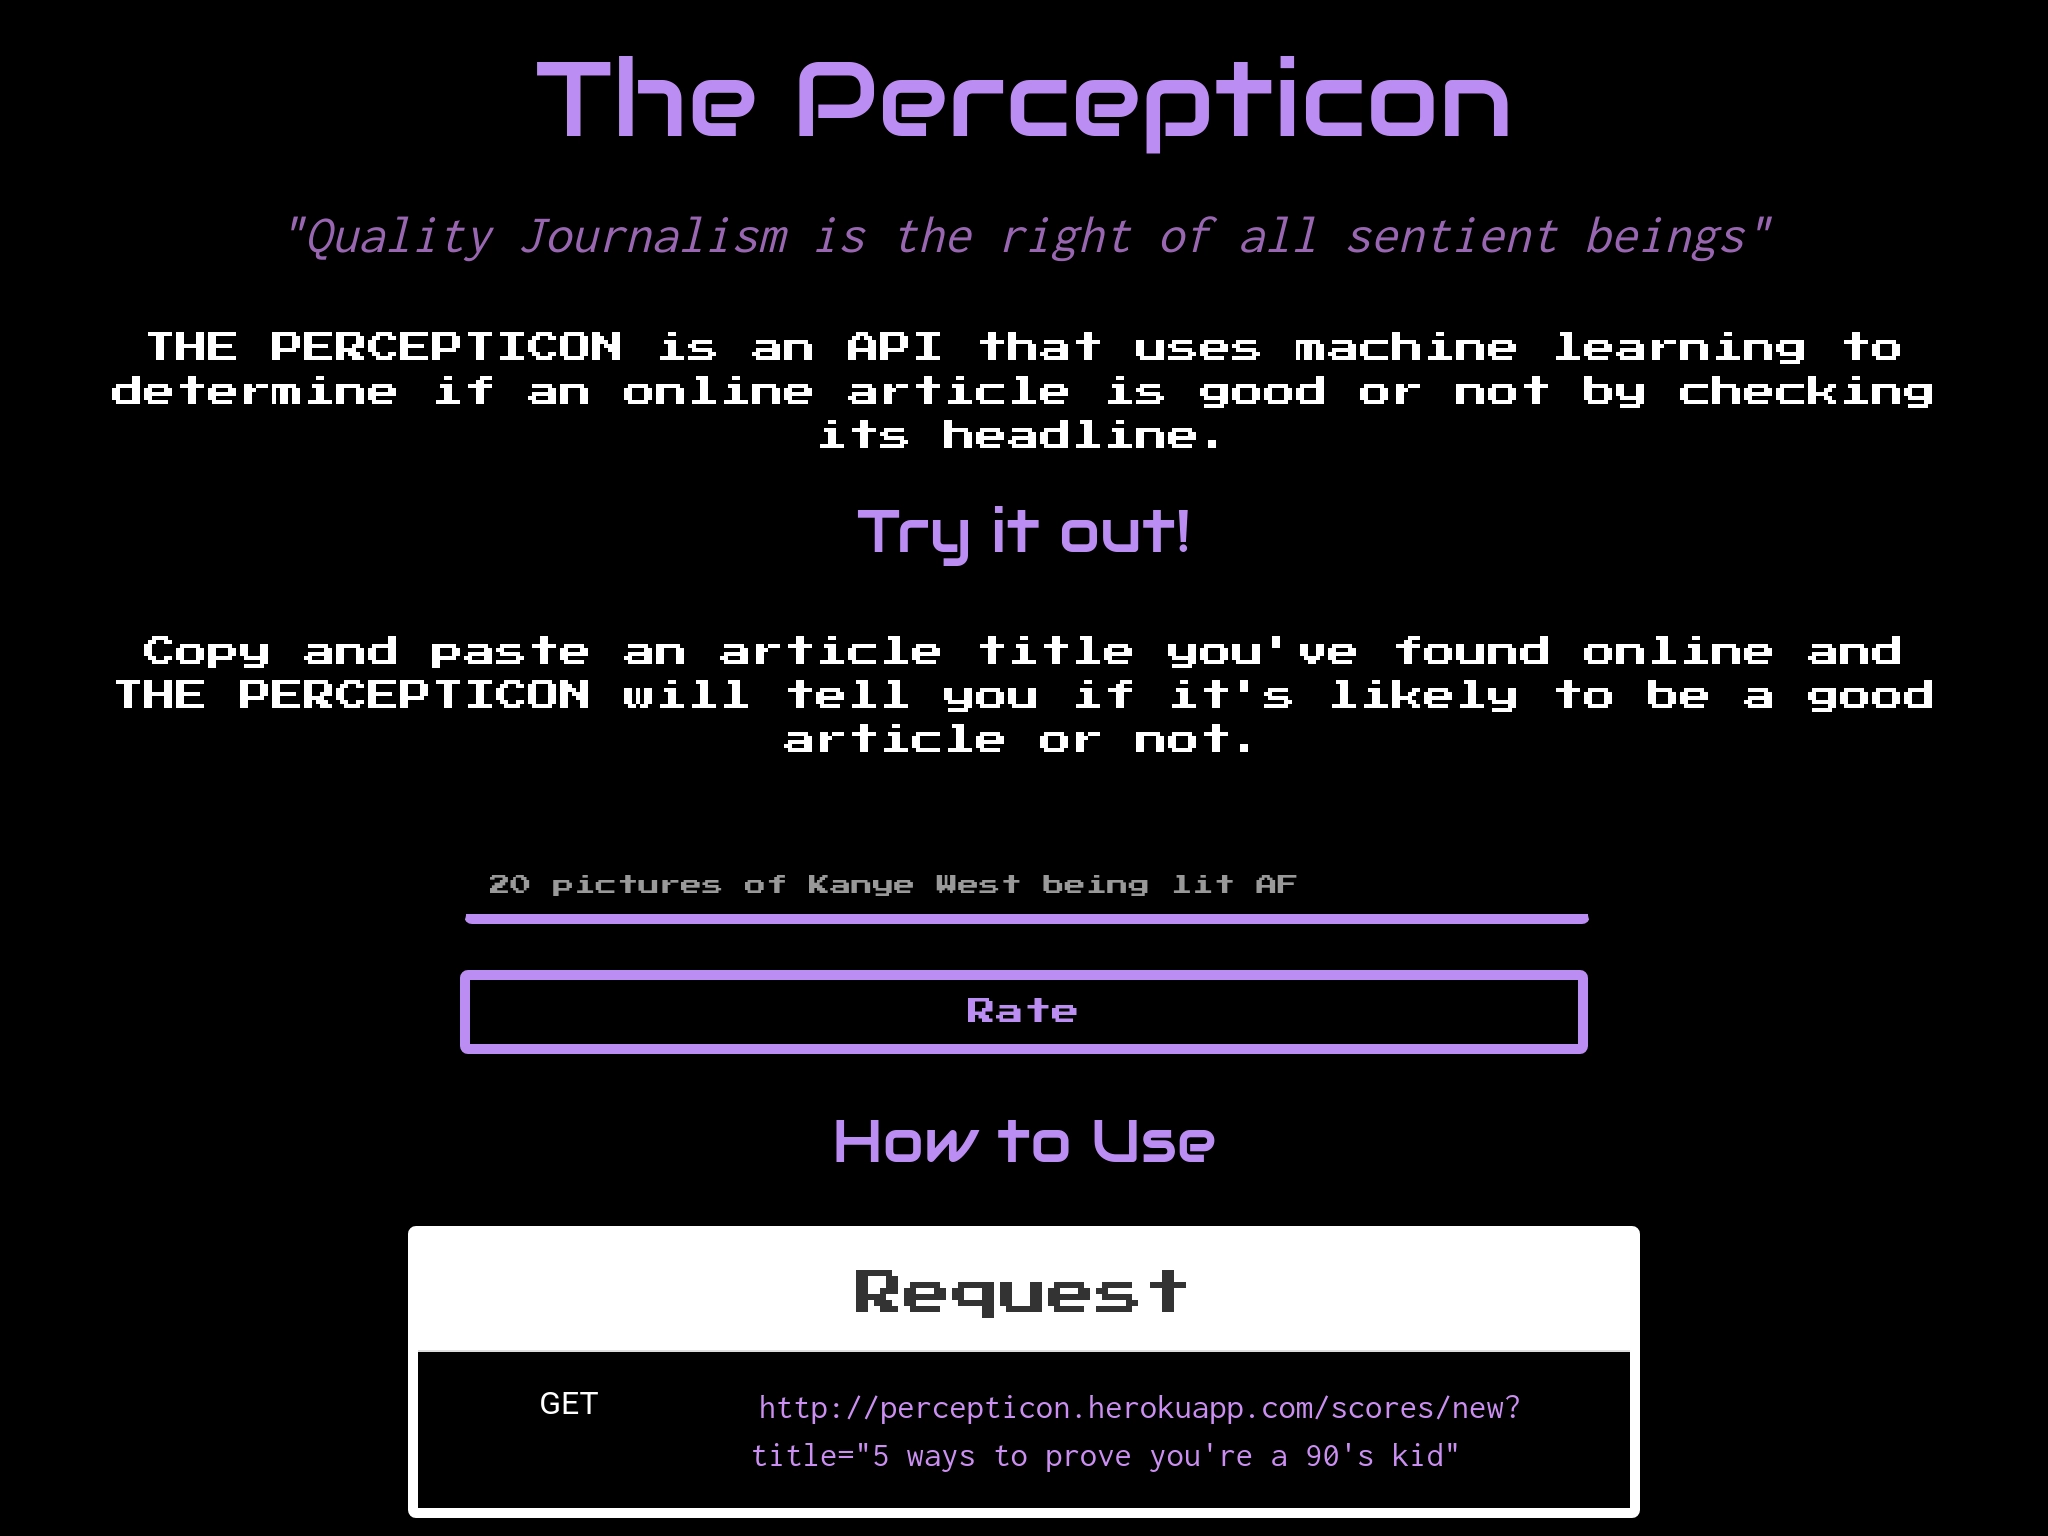 A screenshot of the The PERCEPTICON website